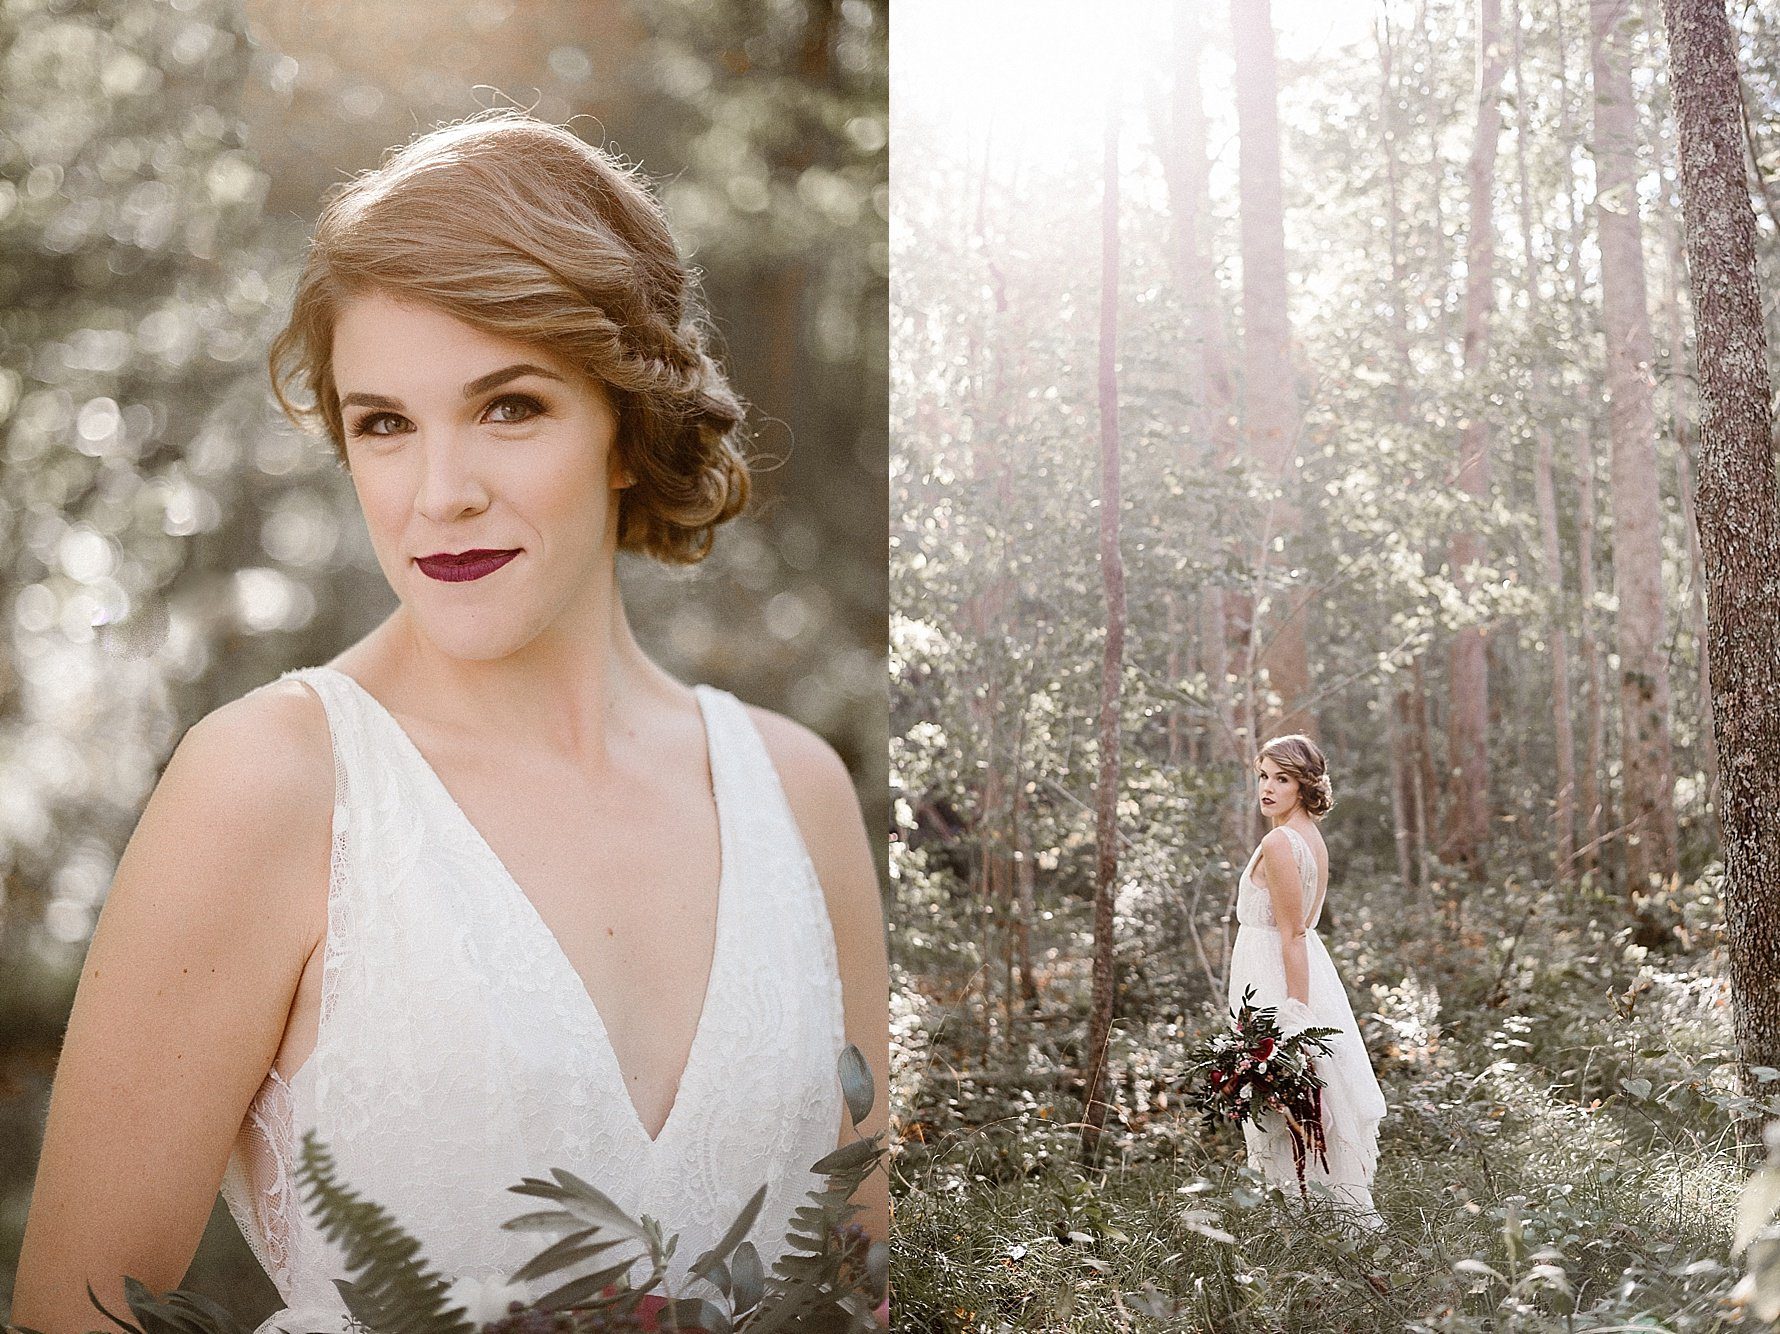 Smoky Mountain Bridal Photographers | Erin Morrison Photography www.erinmorrisonphotography.com